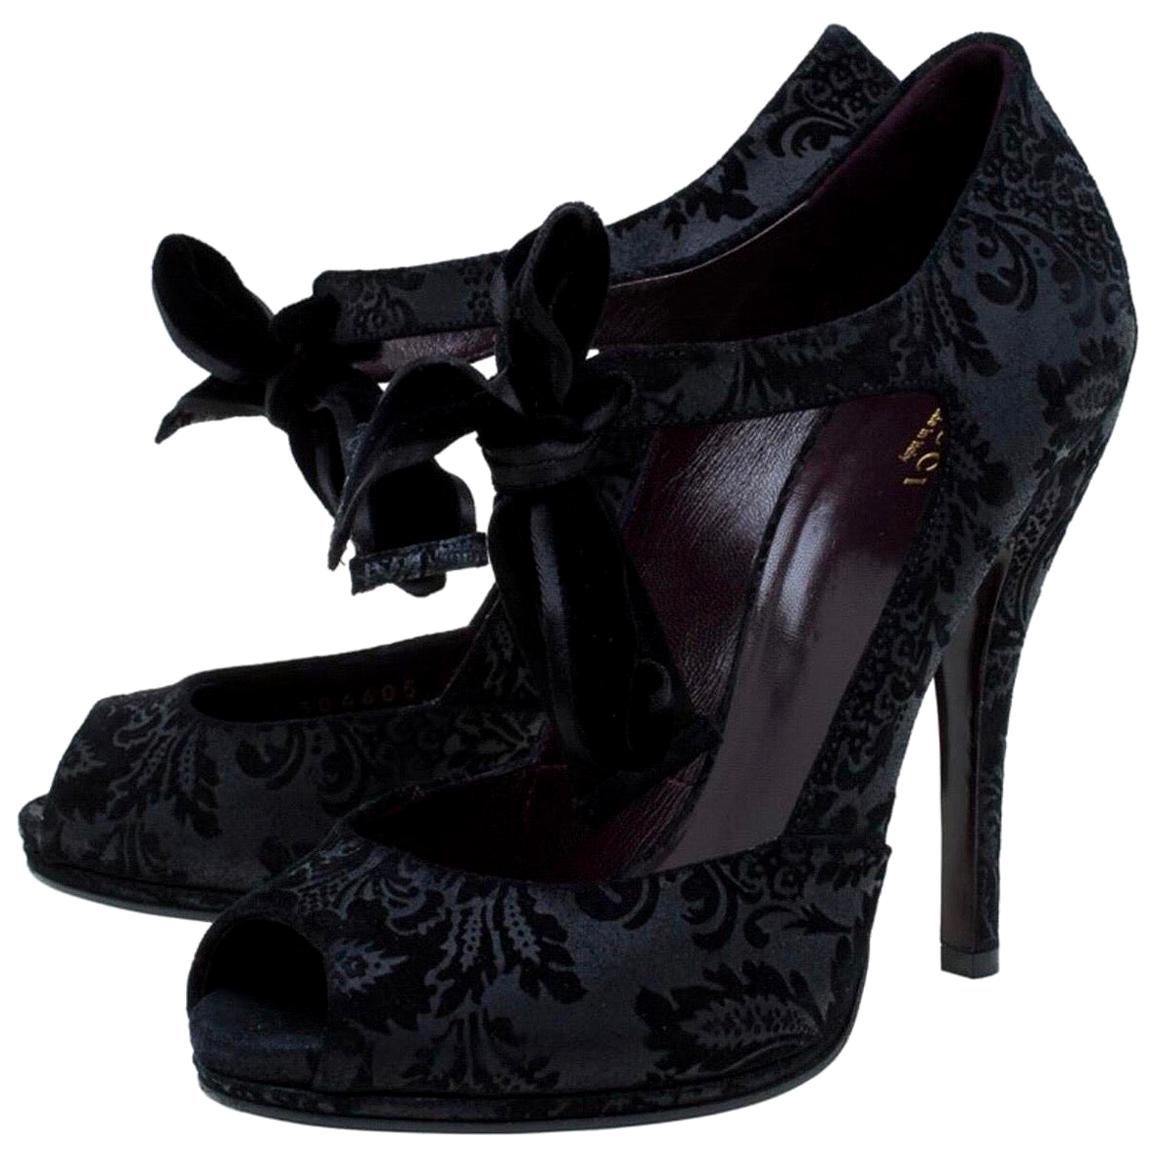 NEW Black Gucci Suede Brocade Pineapple High Heel Sandals Pumps Velvet Bowtie 38 For Sale